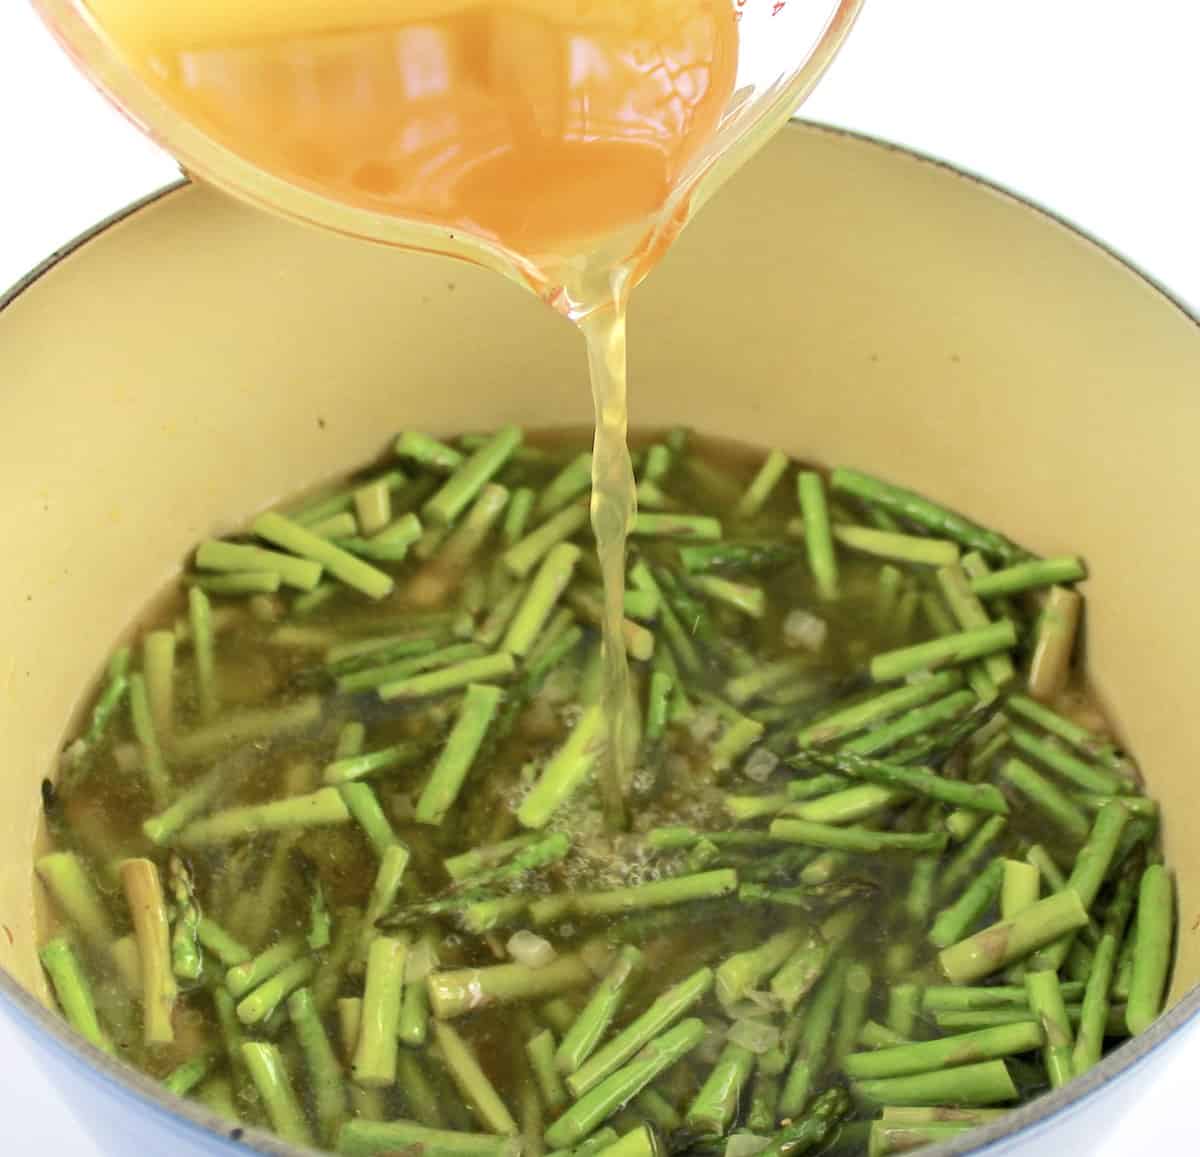 Cream of Asparagus Soup – Nutritious Deliciousness